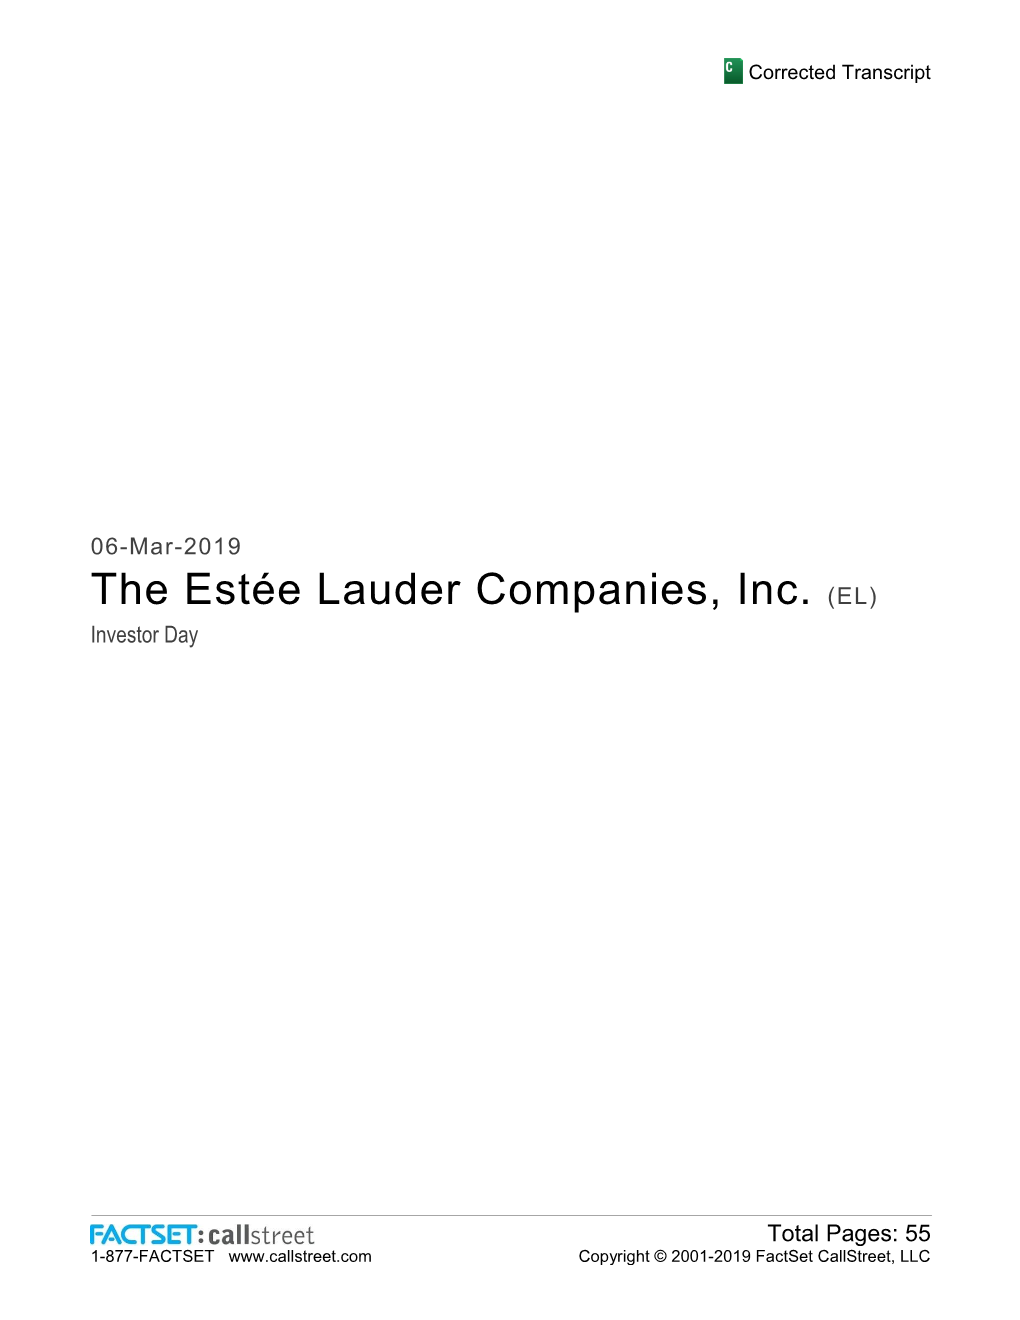 The Estée Lauder Companies, Inc. (EL) Investor Day